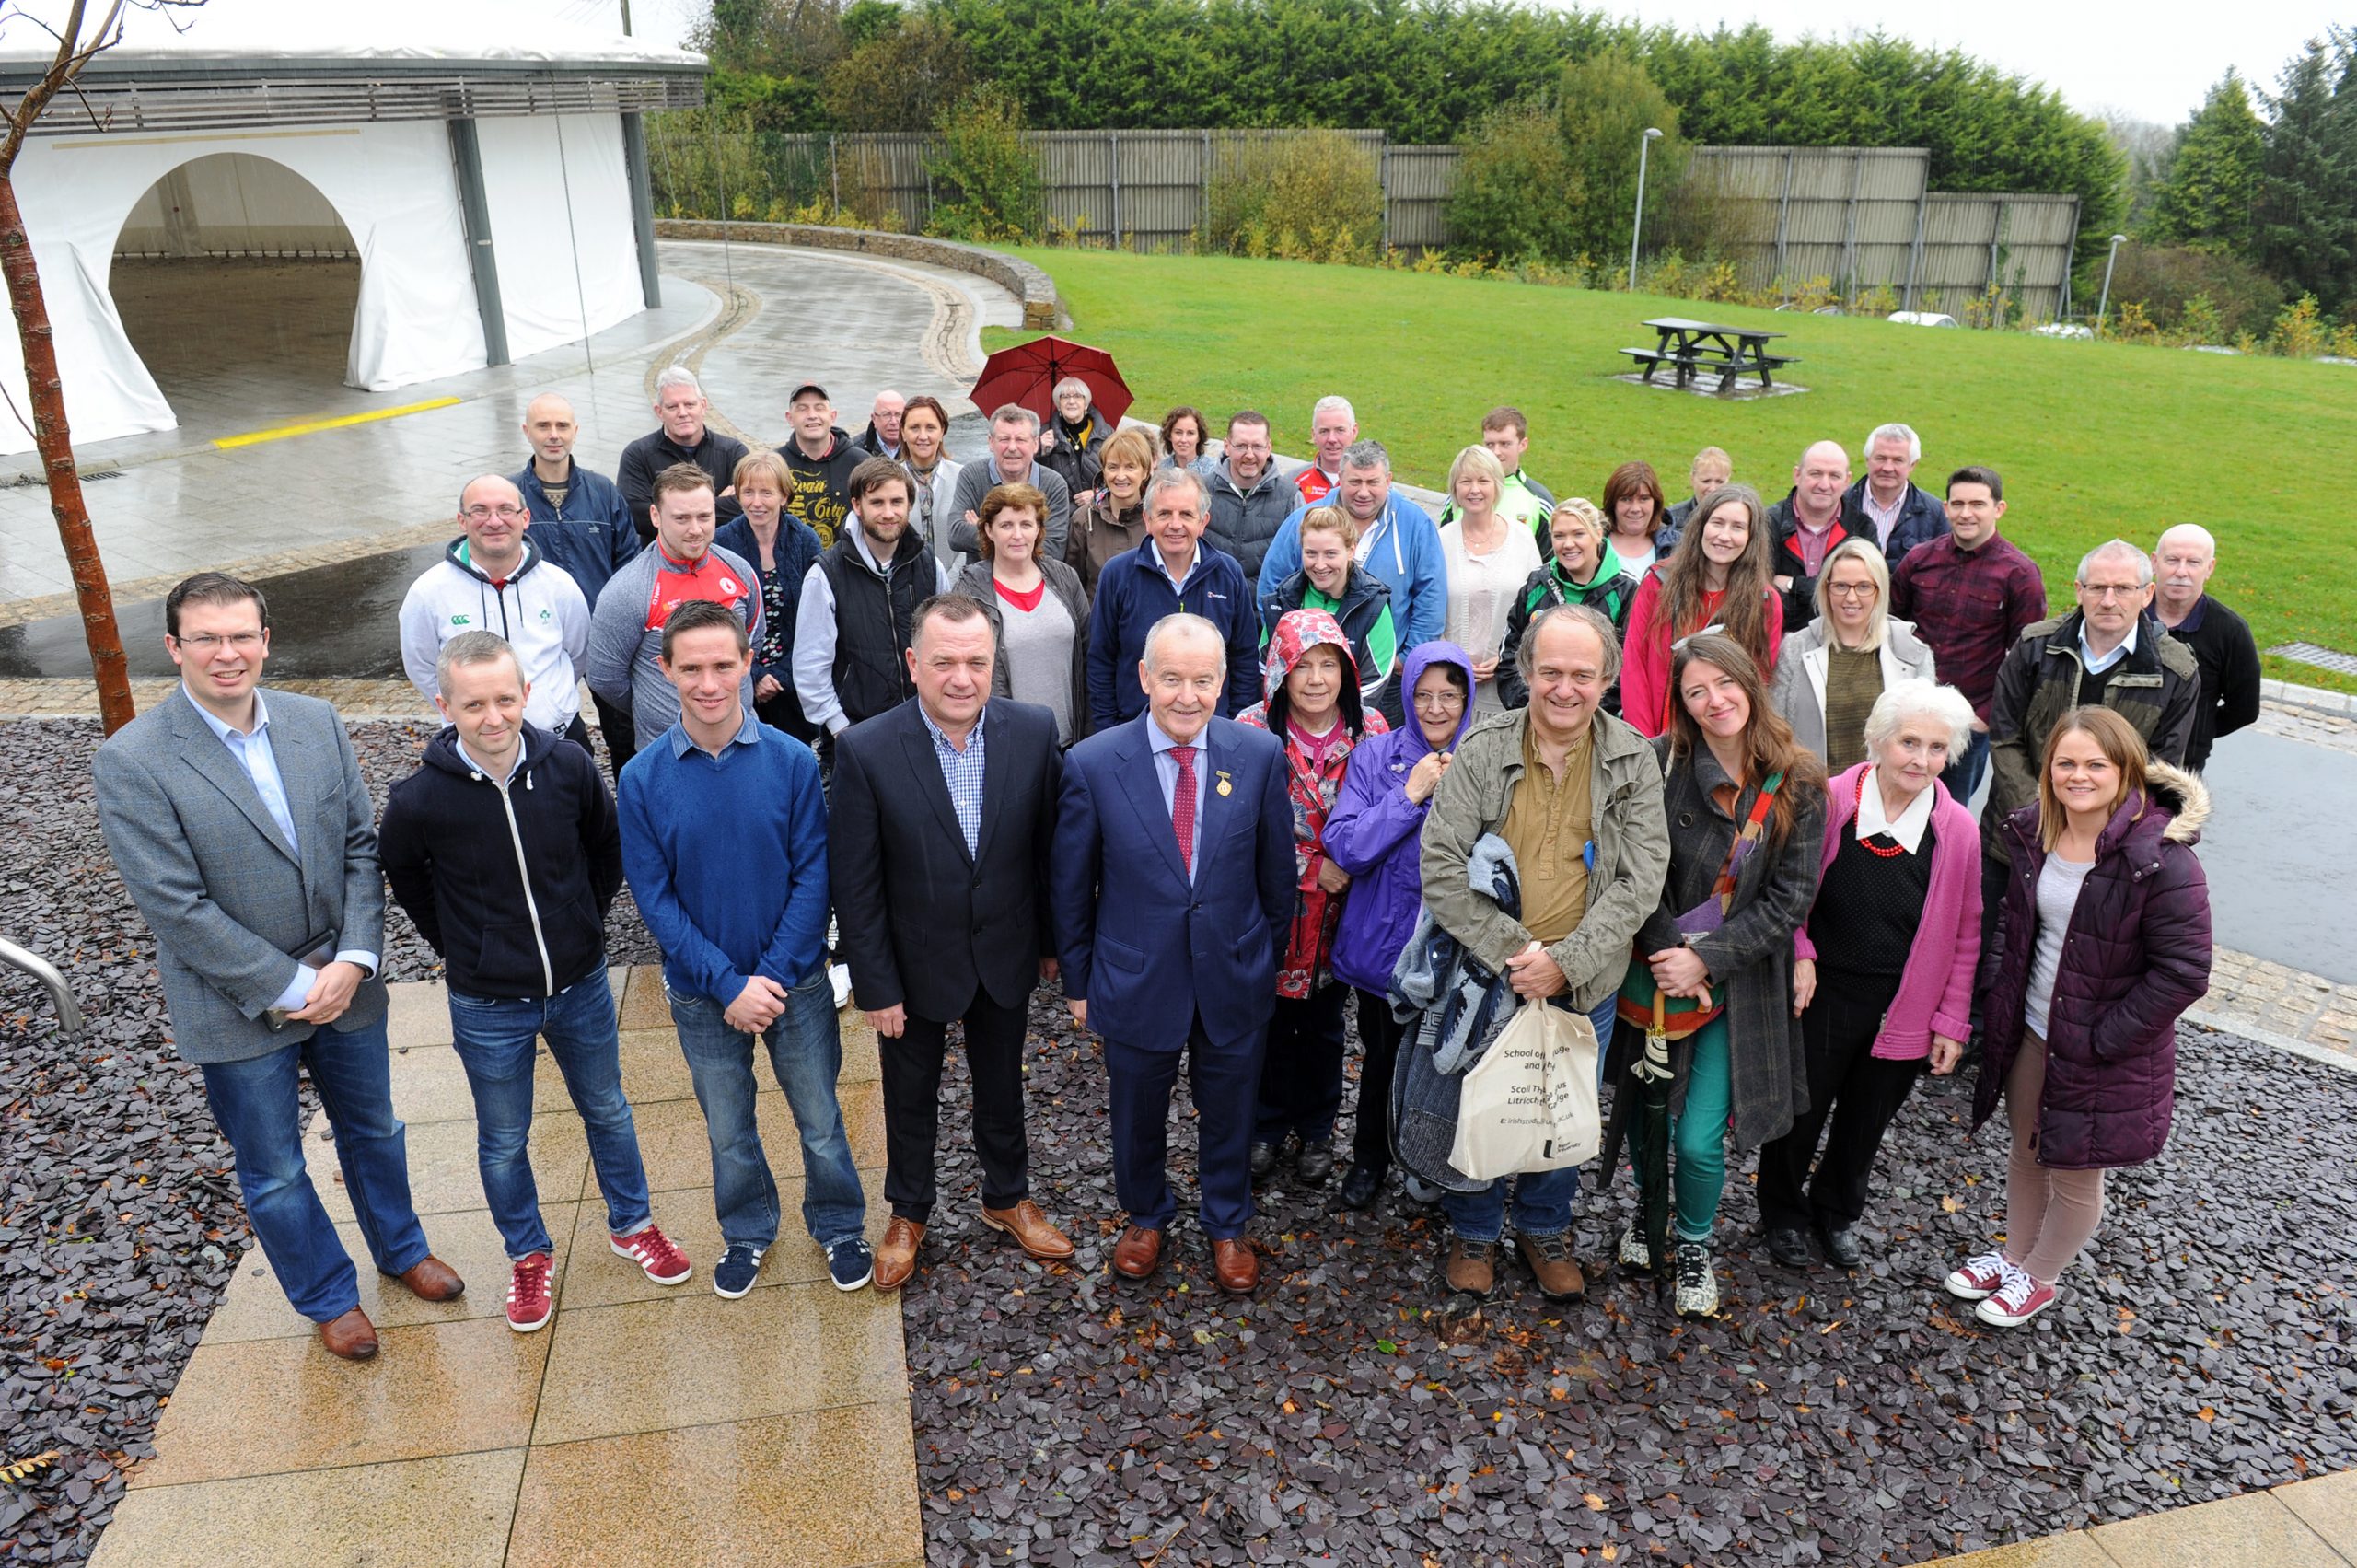 Ulster GAA helps 35 Members study Irish